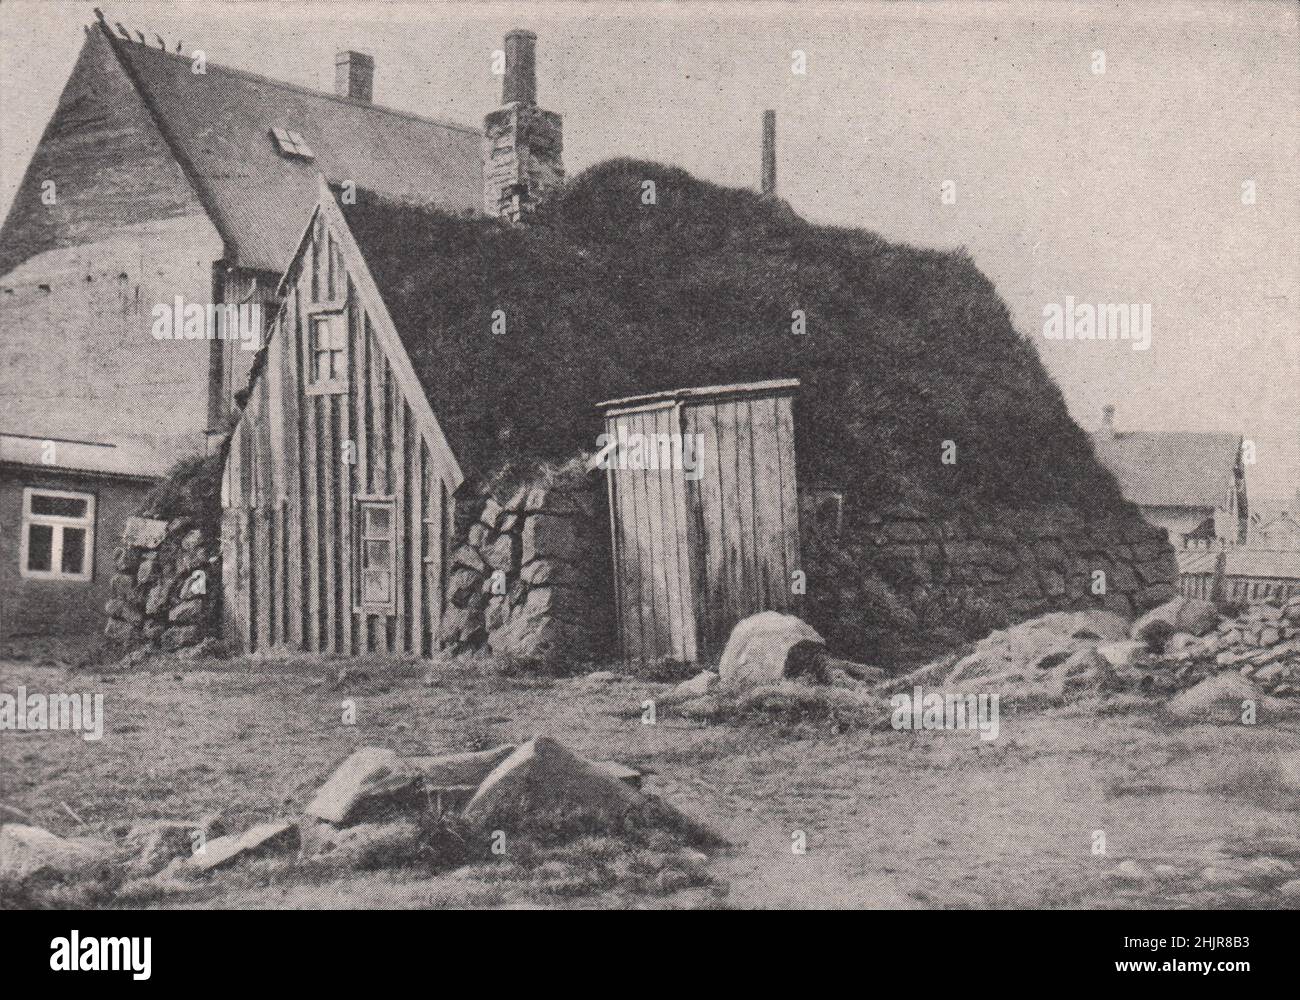 Original type of peat house of the inhabitants of Iceland (1923) Stock Photo